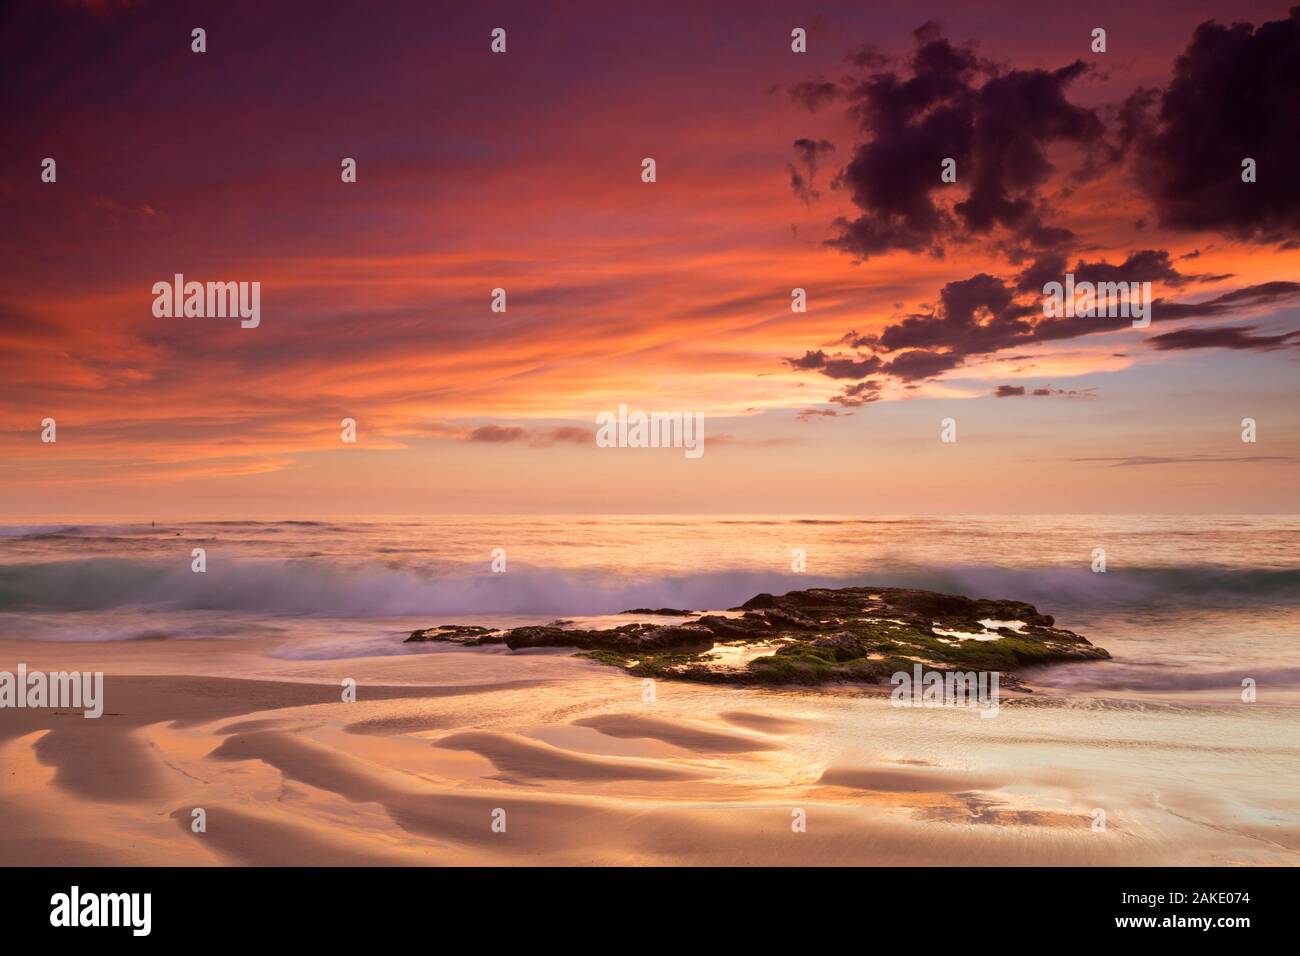 Dramatic Sunset from Windansea beach in La Jolla, California Stock Photo